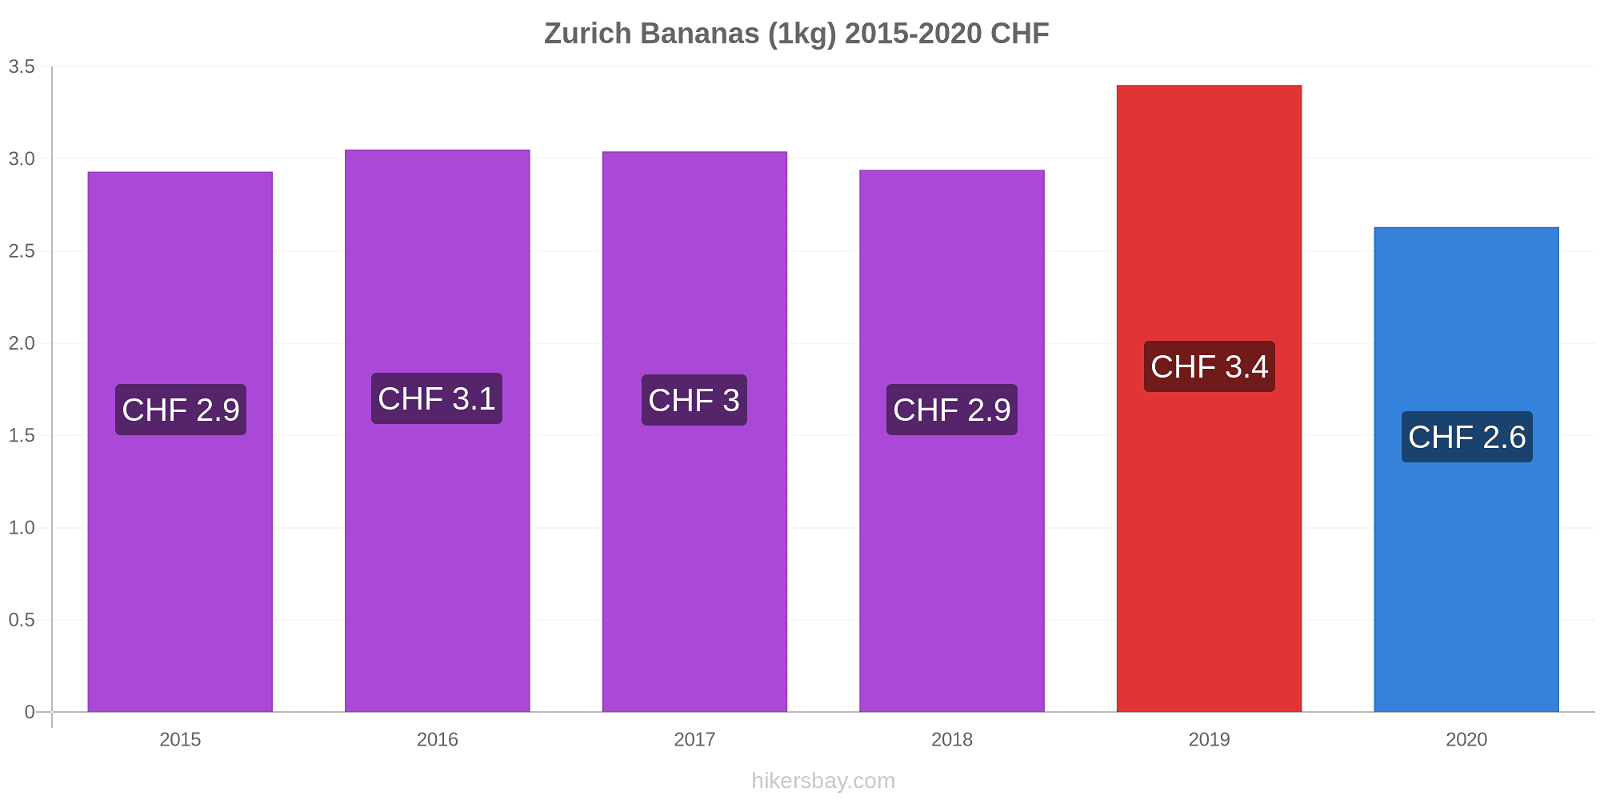 Zurich price changes Bananas (1kg) hikersbay.com